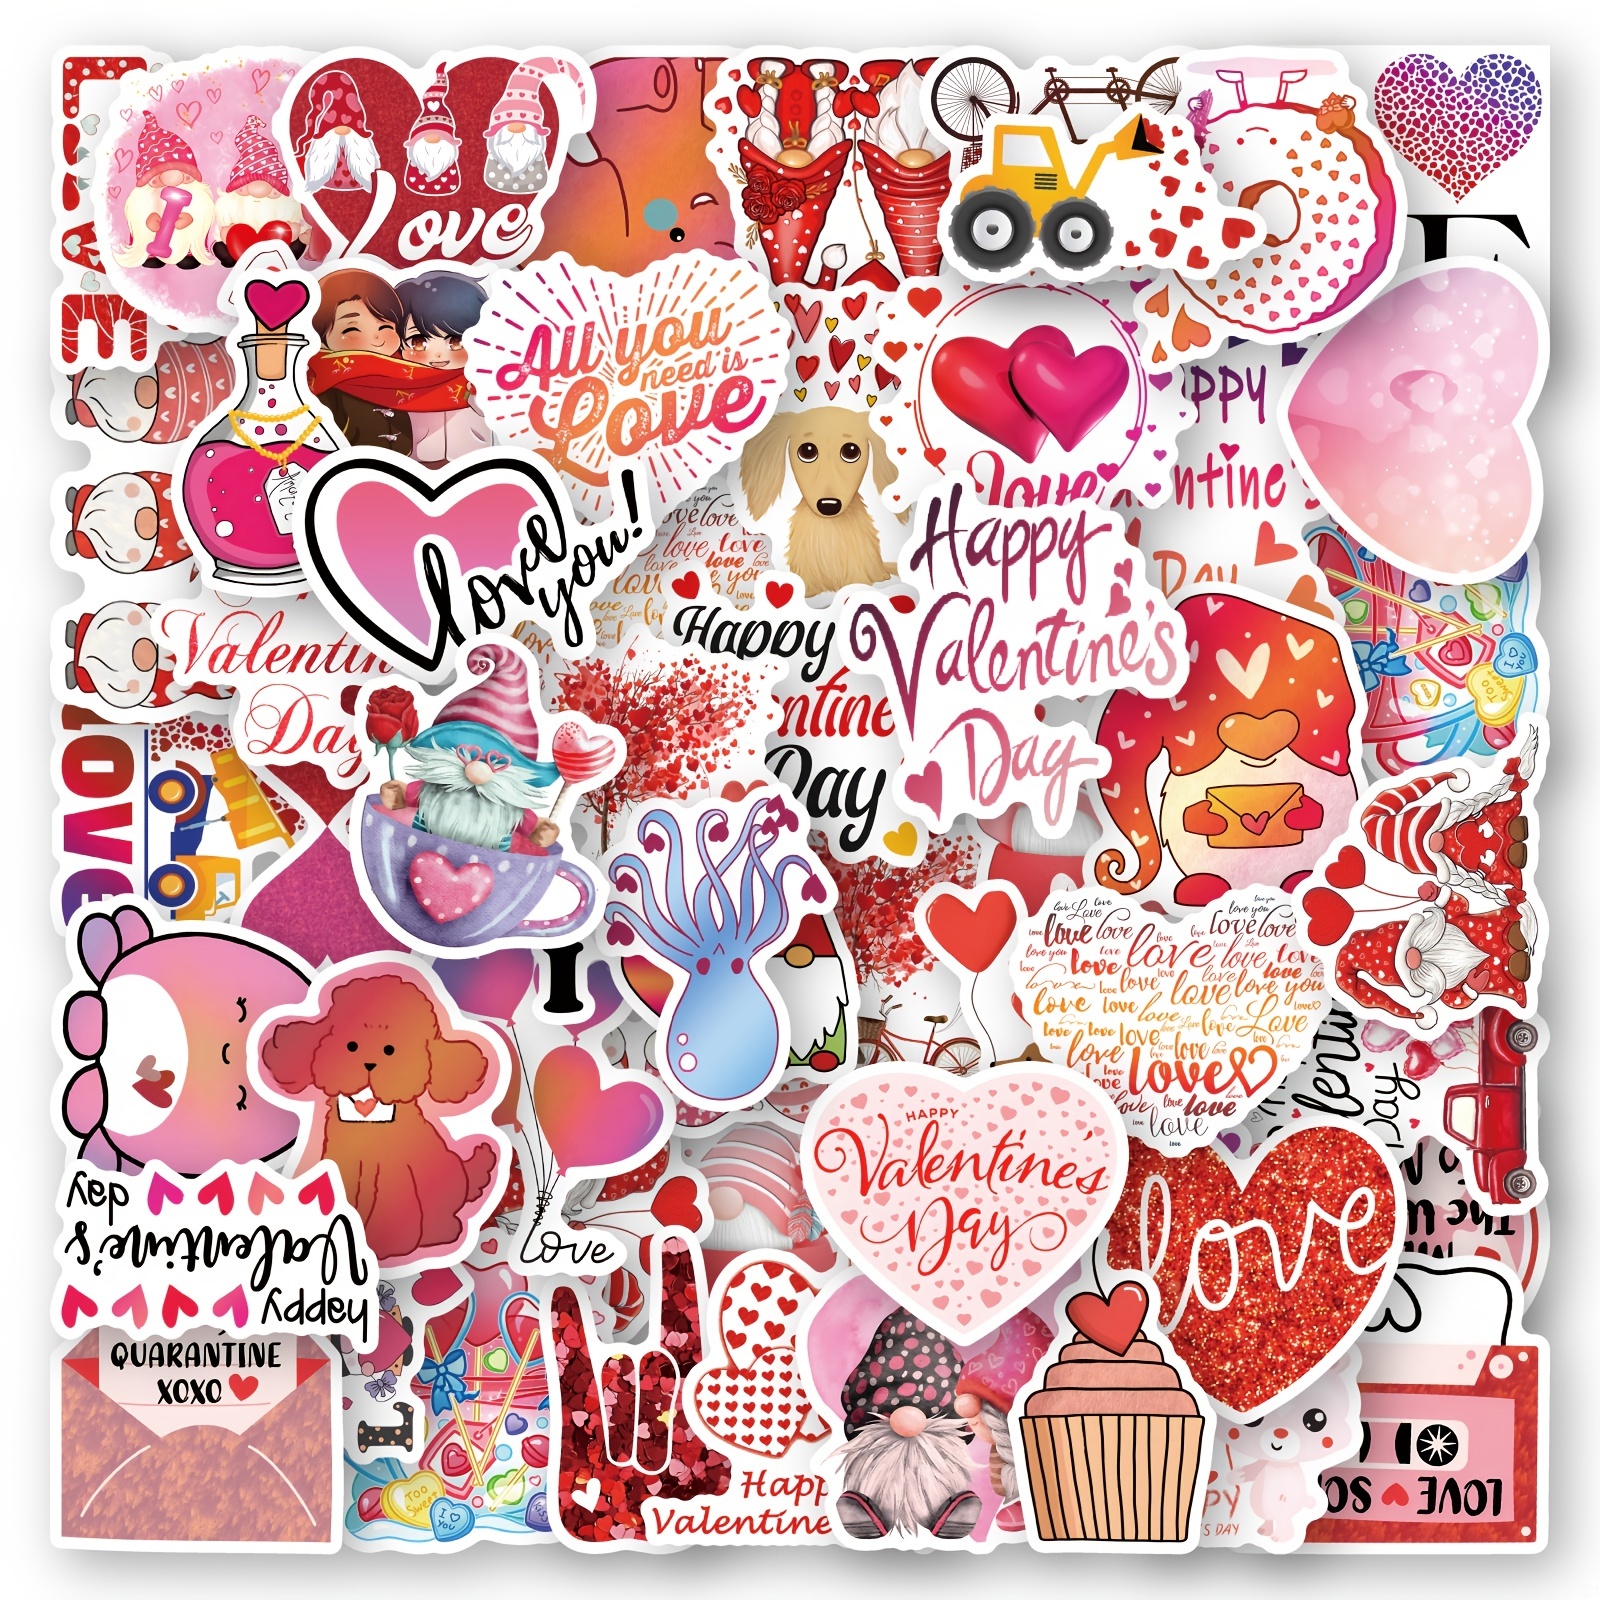  Valentine Stickers for Kids 500PCS Valentine Candy Heart  Stickers for Valentine's Day Party Gift School Classroom Supplies  Decoration : Toys & Games